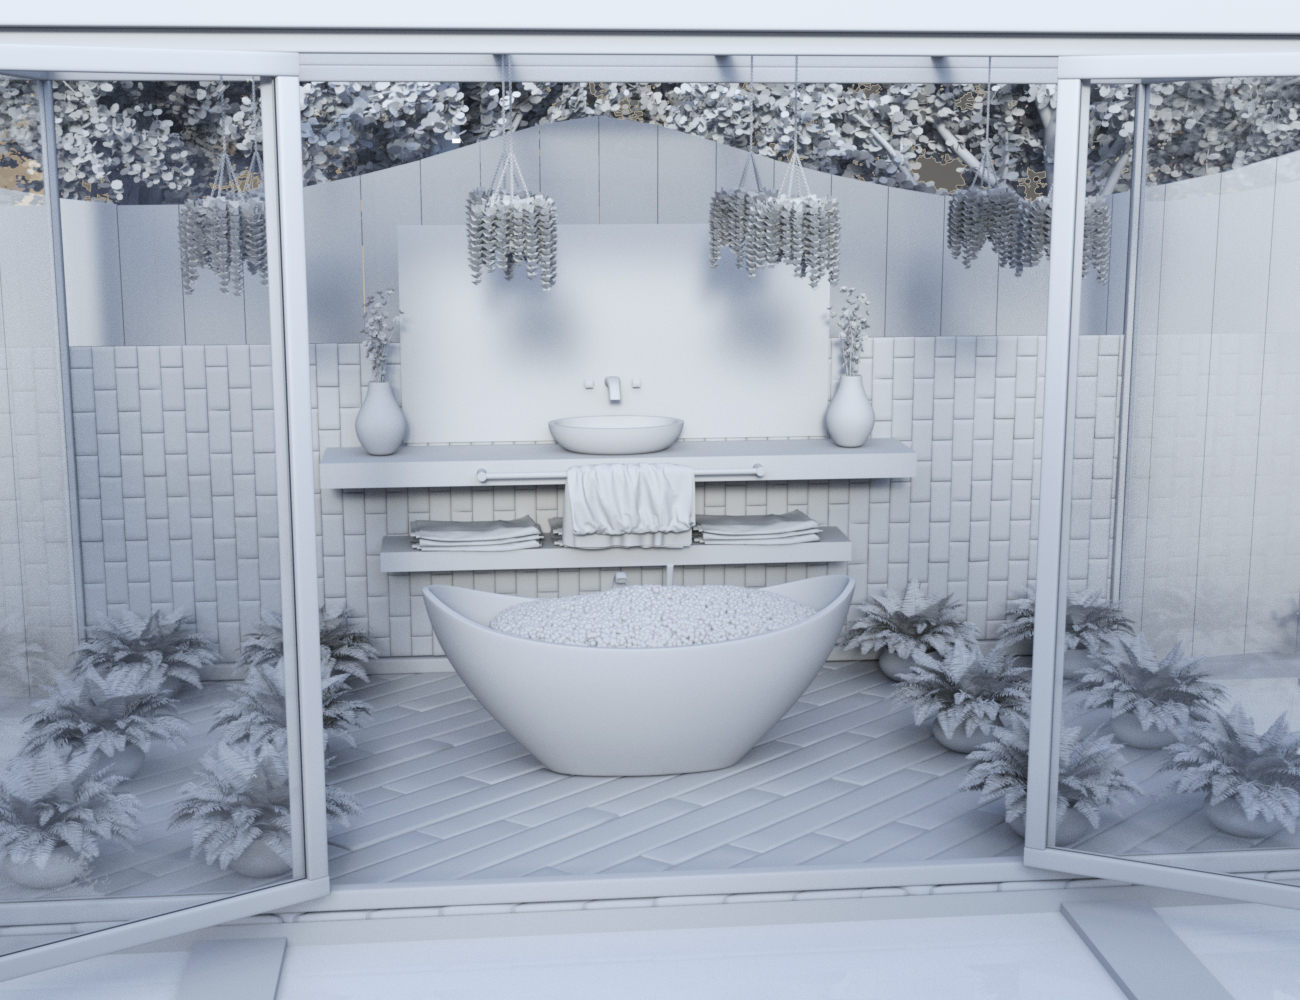 Garden Bathroom by: Charlie, 3D Models by Daz 3D